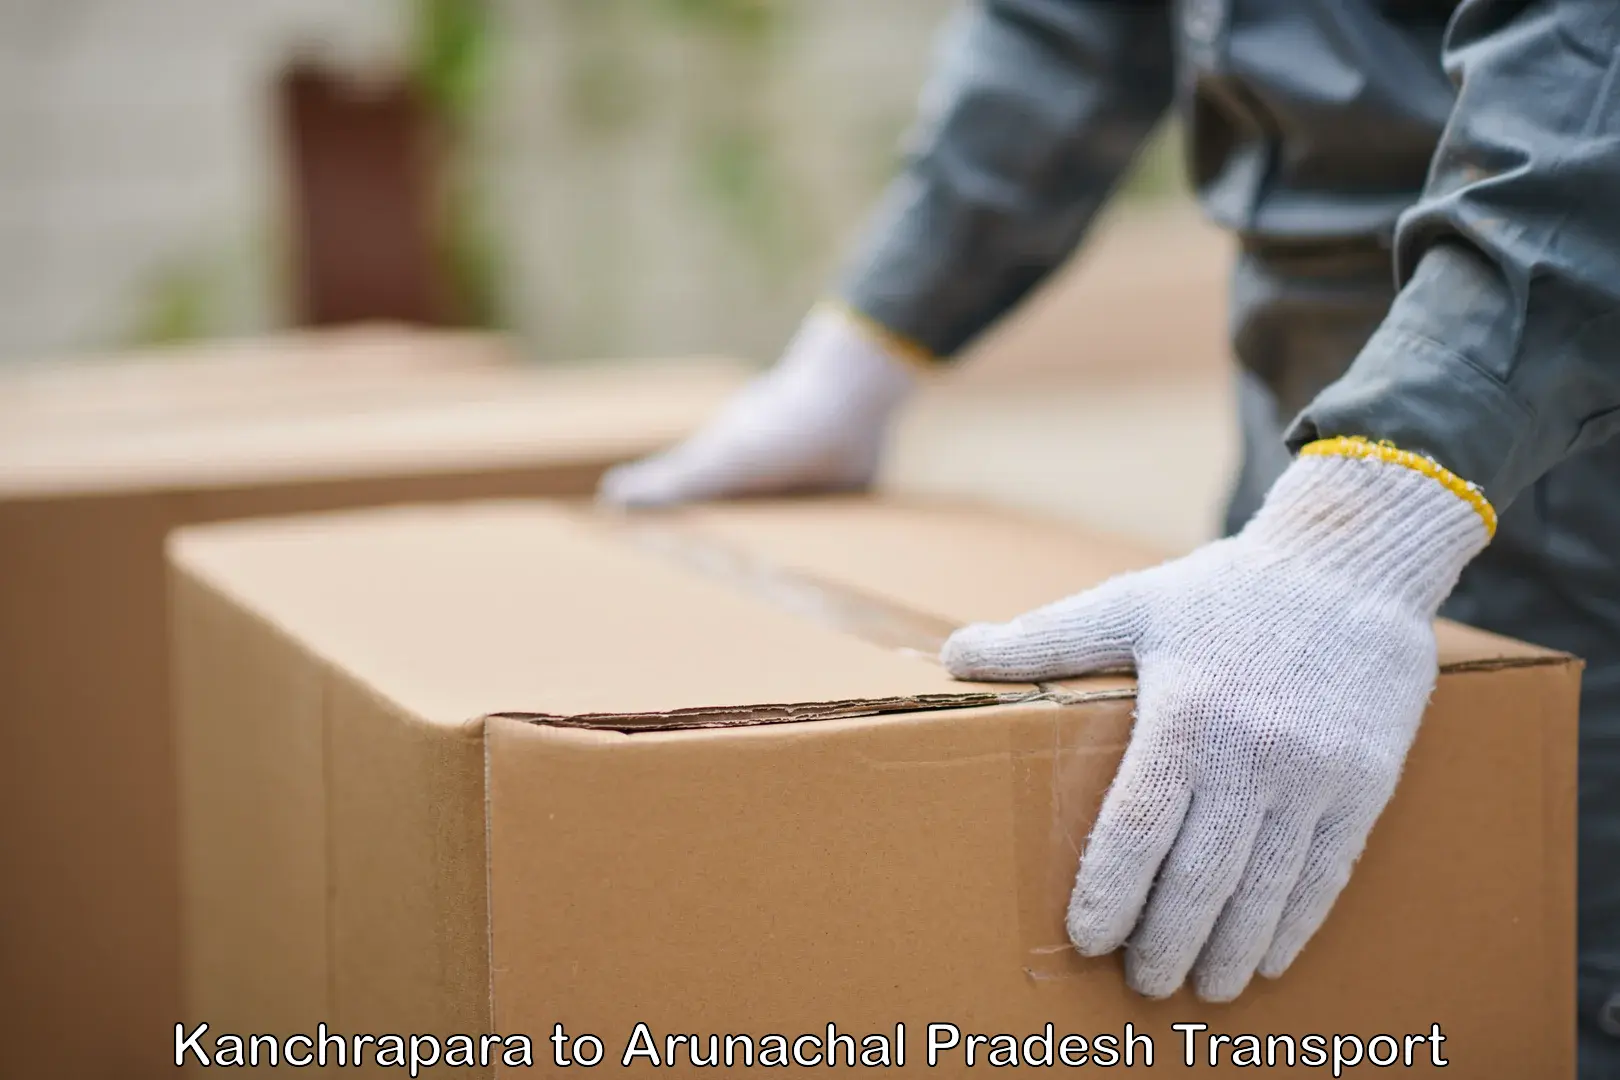 Truck transport companies in India Kanchrapara to Arunachal Pradesh